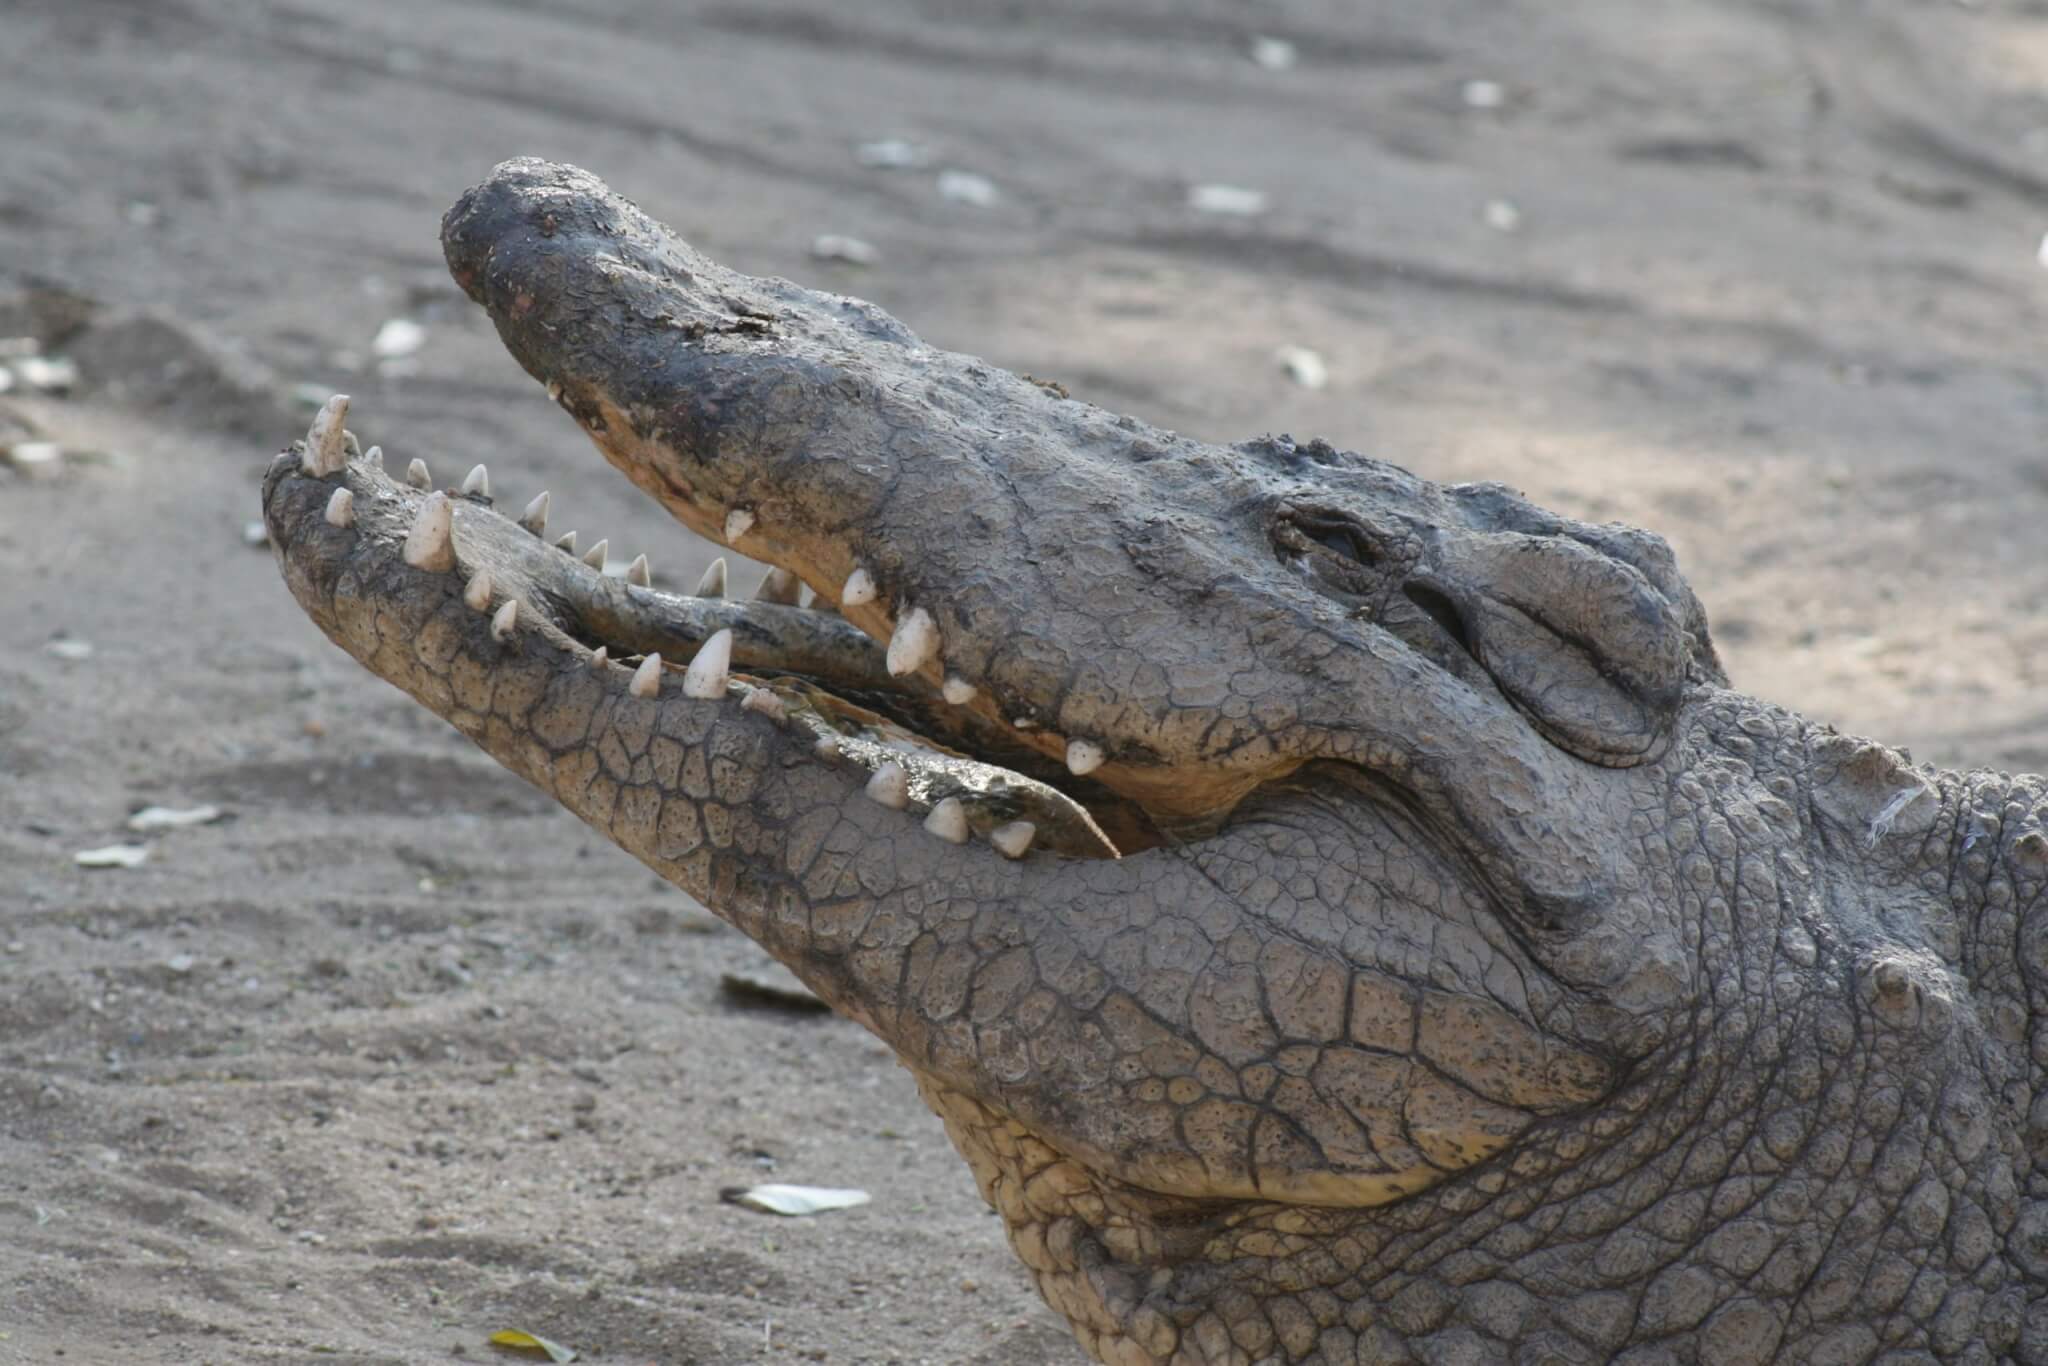 30-Foot 'Terror Crocodile' Ambushed Dinosaurs at Water's Edge, Smart News